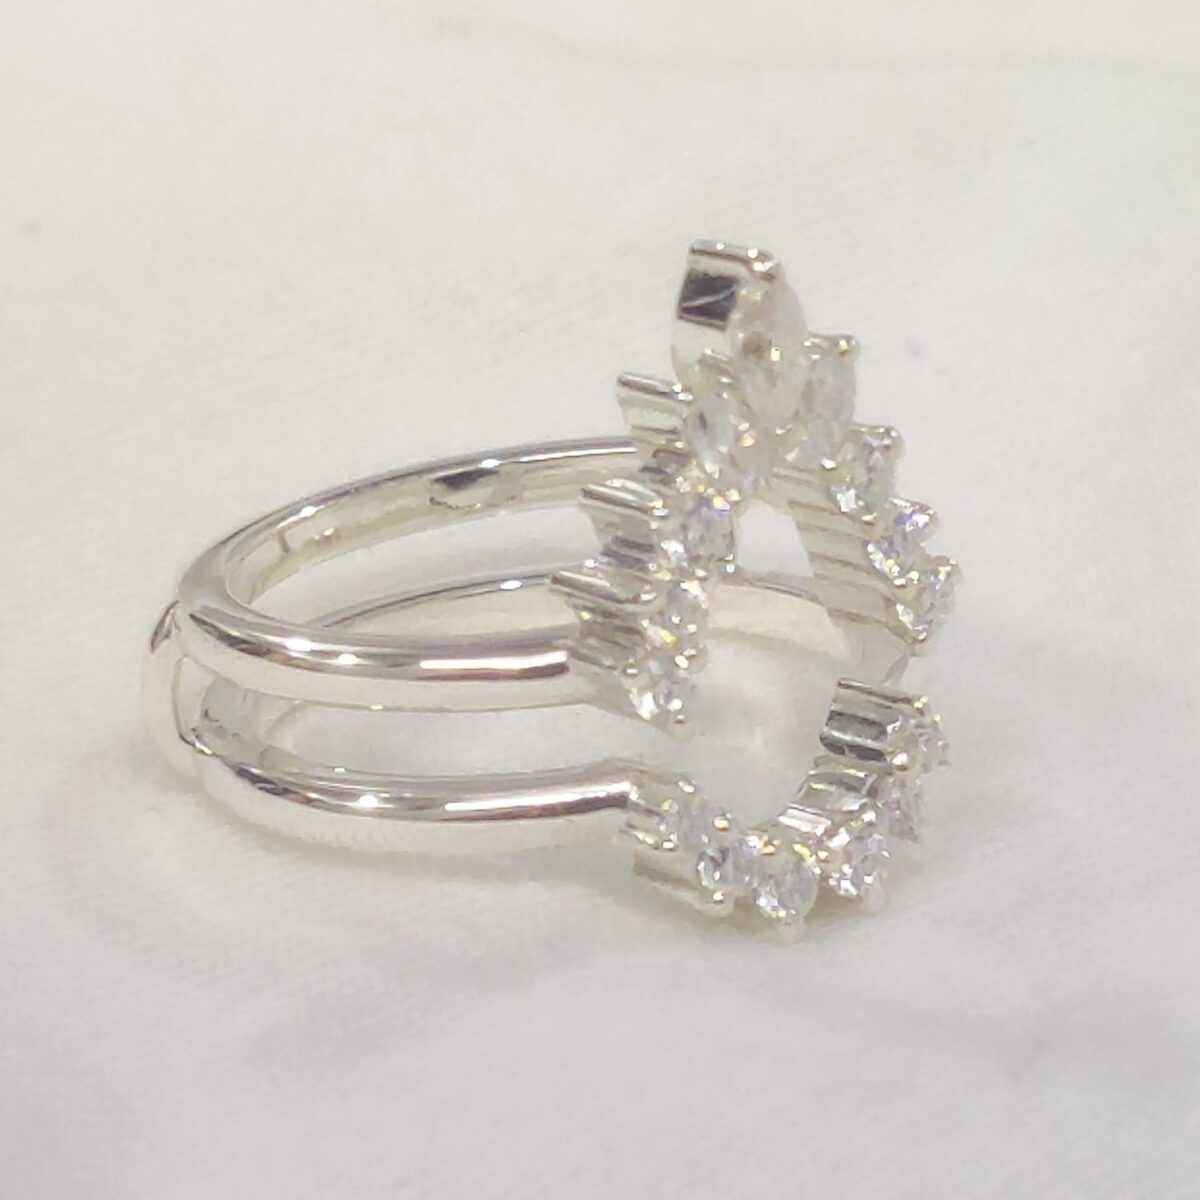 Pear shape diamond ring enhancer